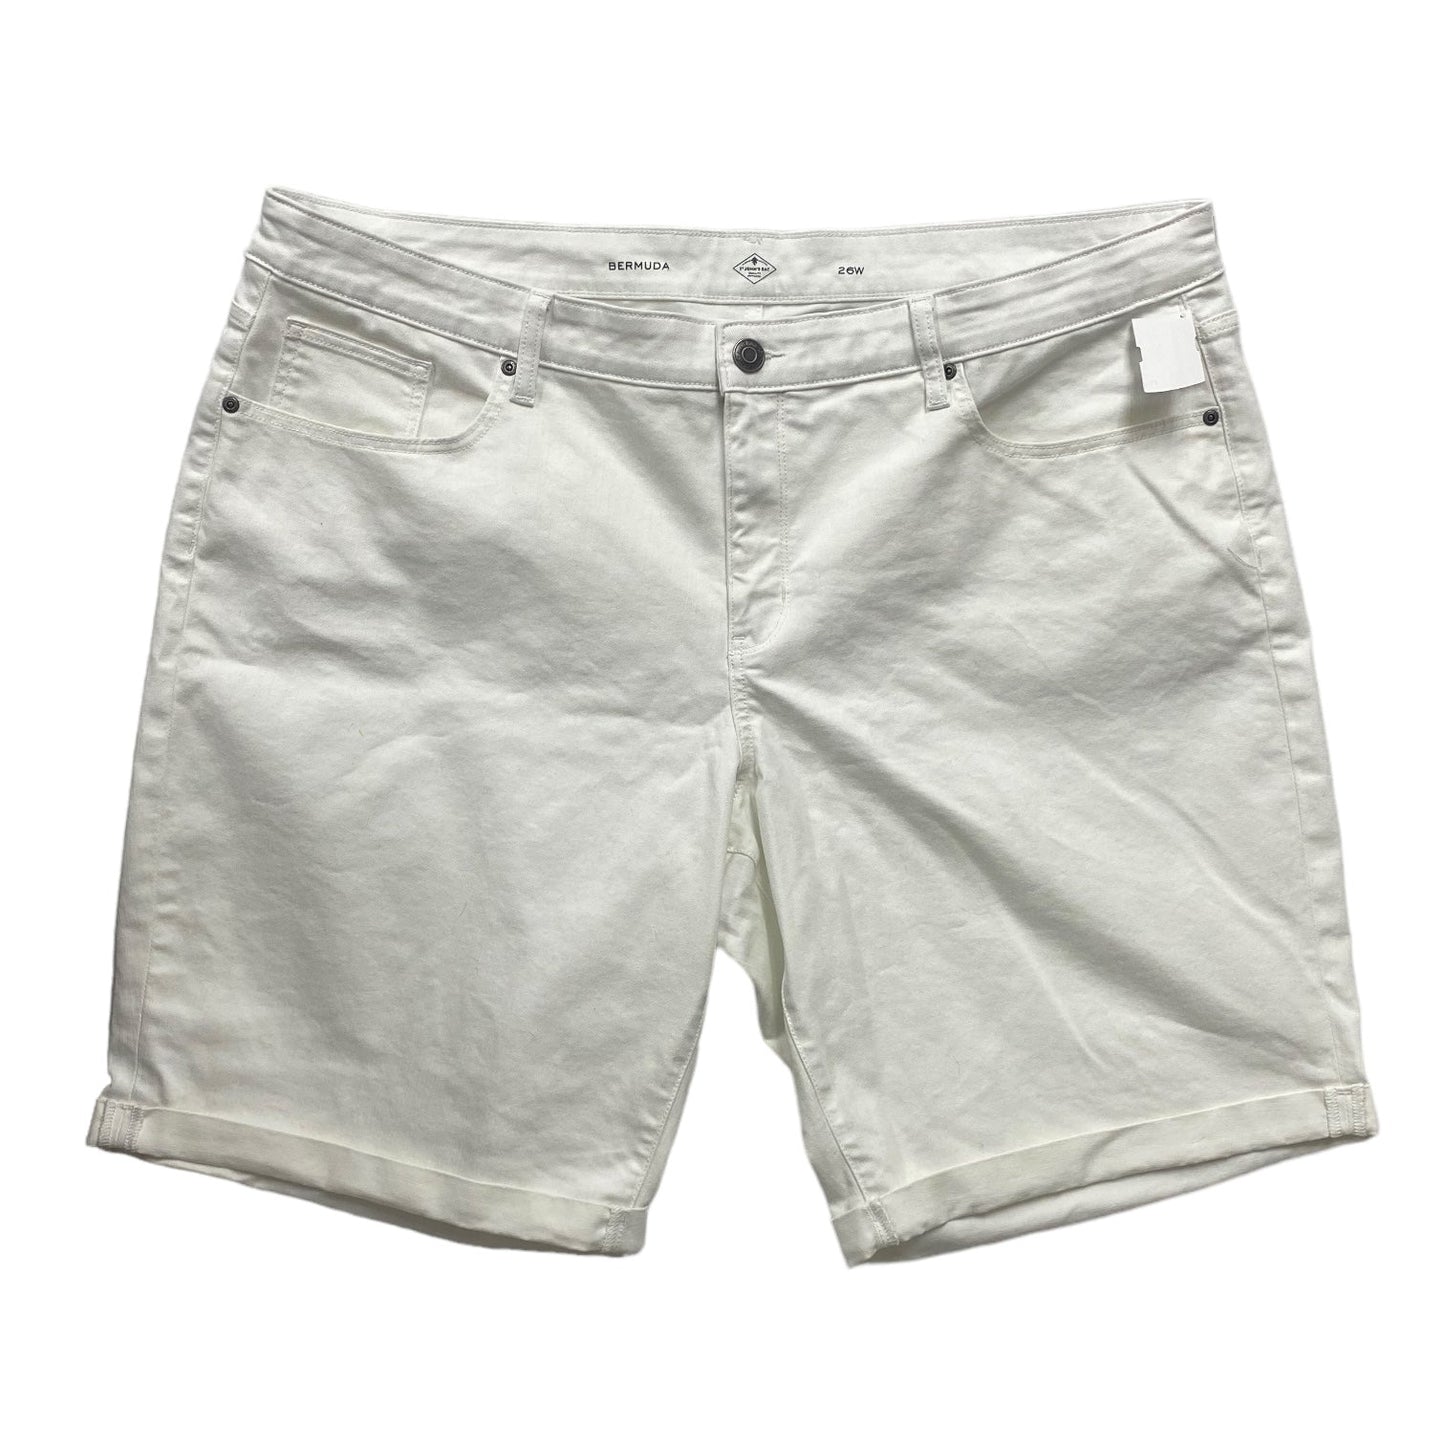 White Shorts St Johns Bay, Size 4x